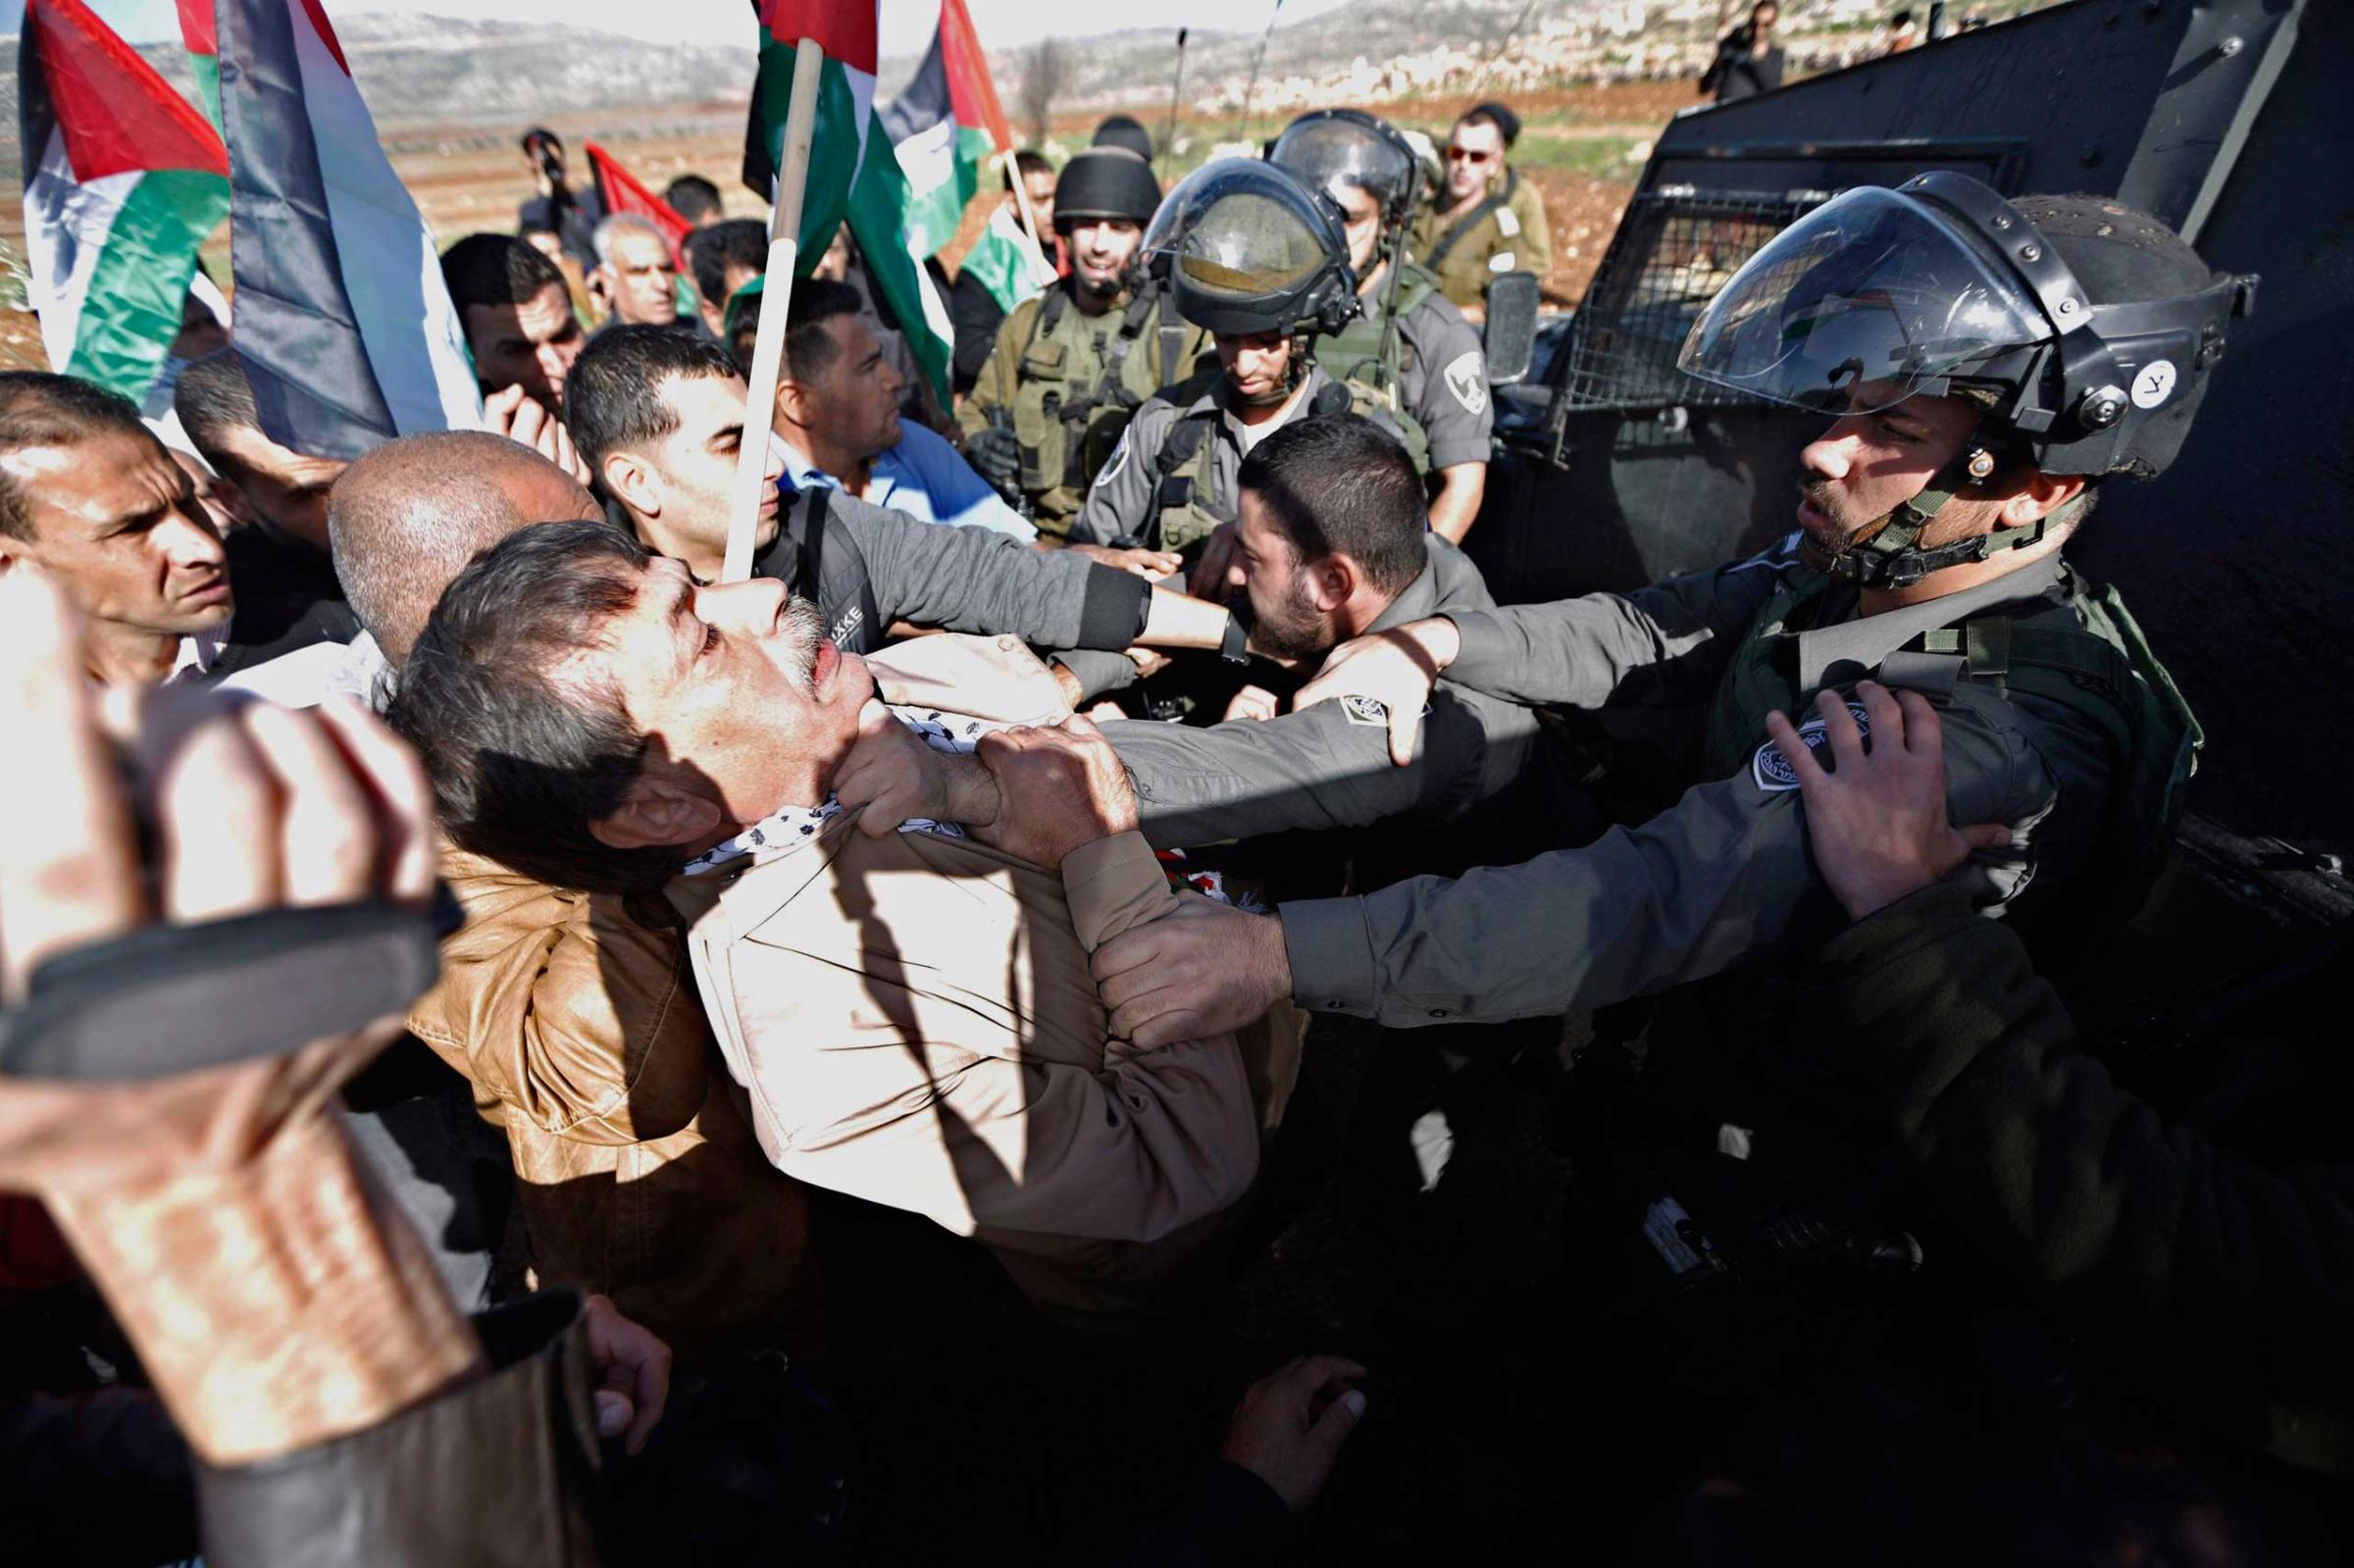 Palestinian minister Ziad Abu Ein scuffles with an Israeli border policeman near the West Bank city of Ramallah